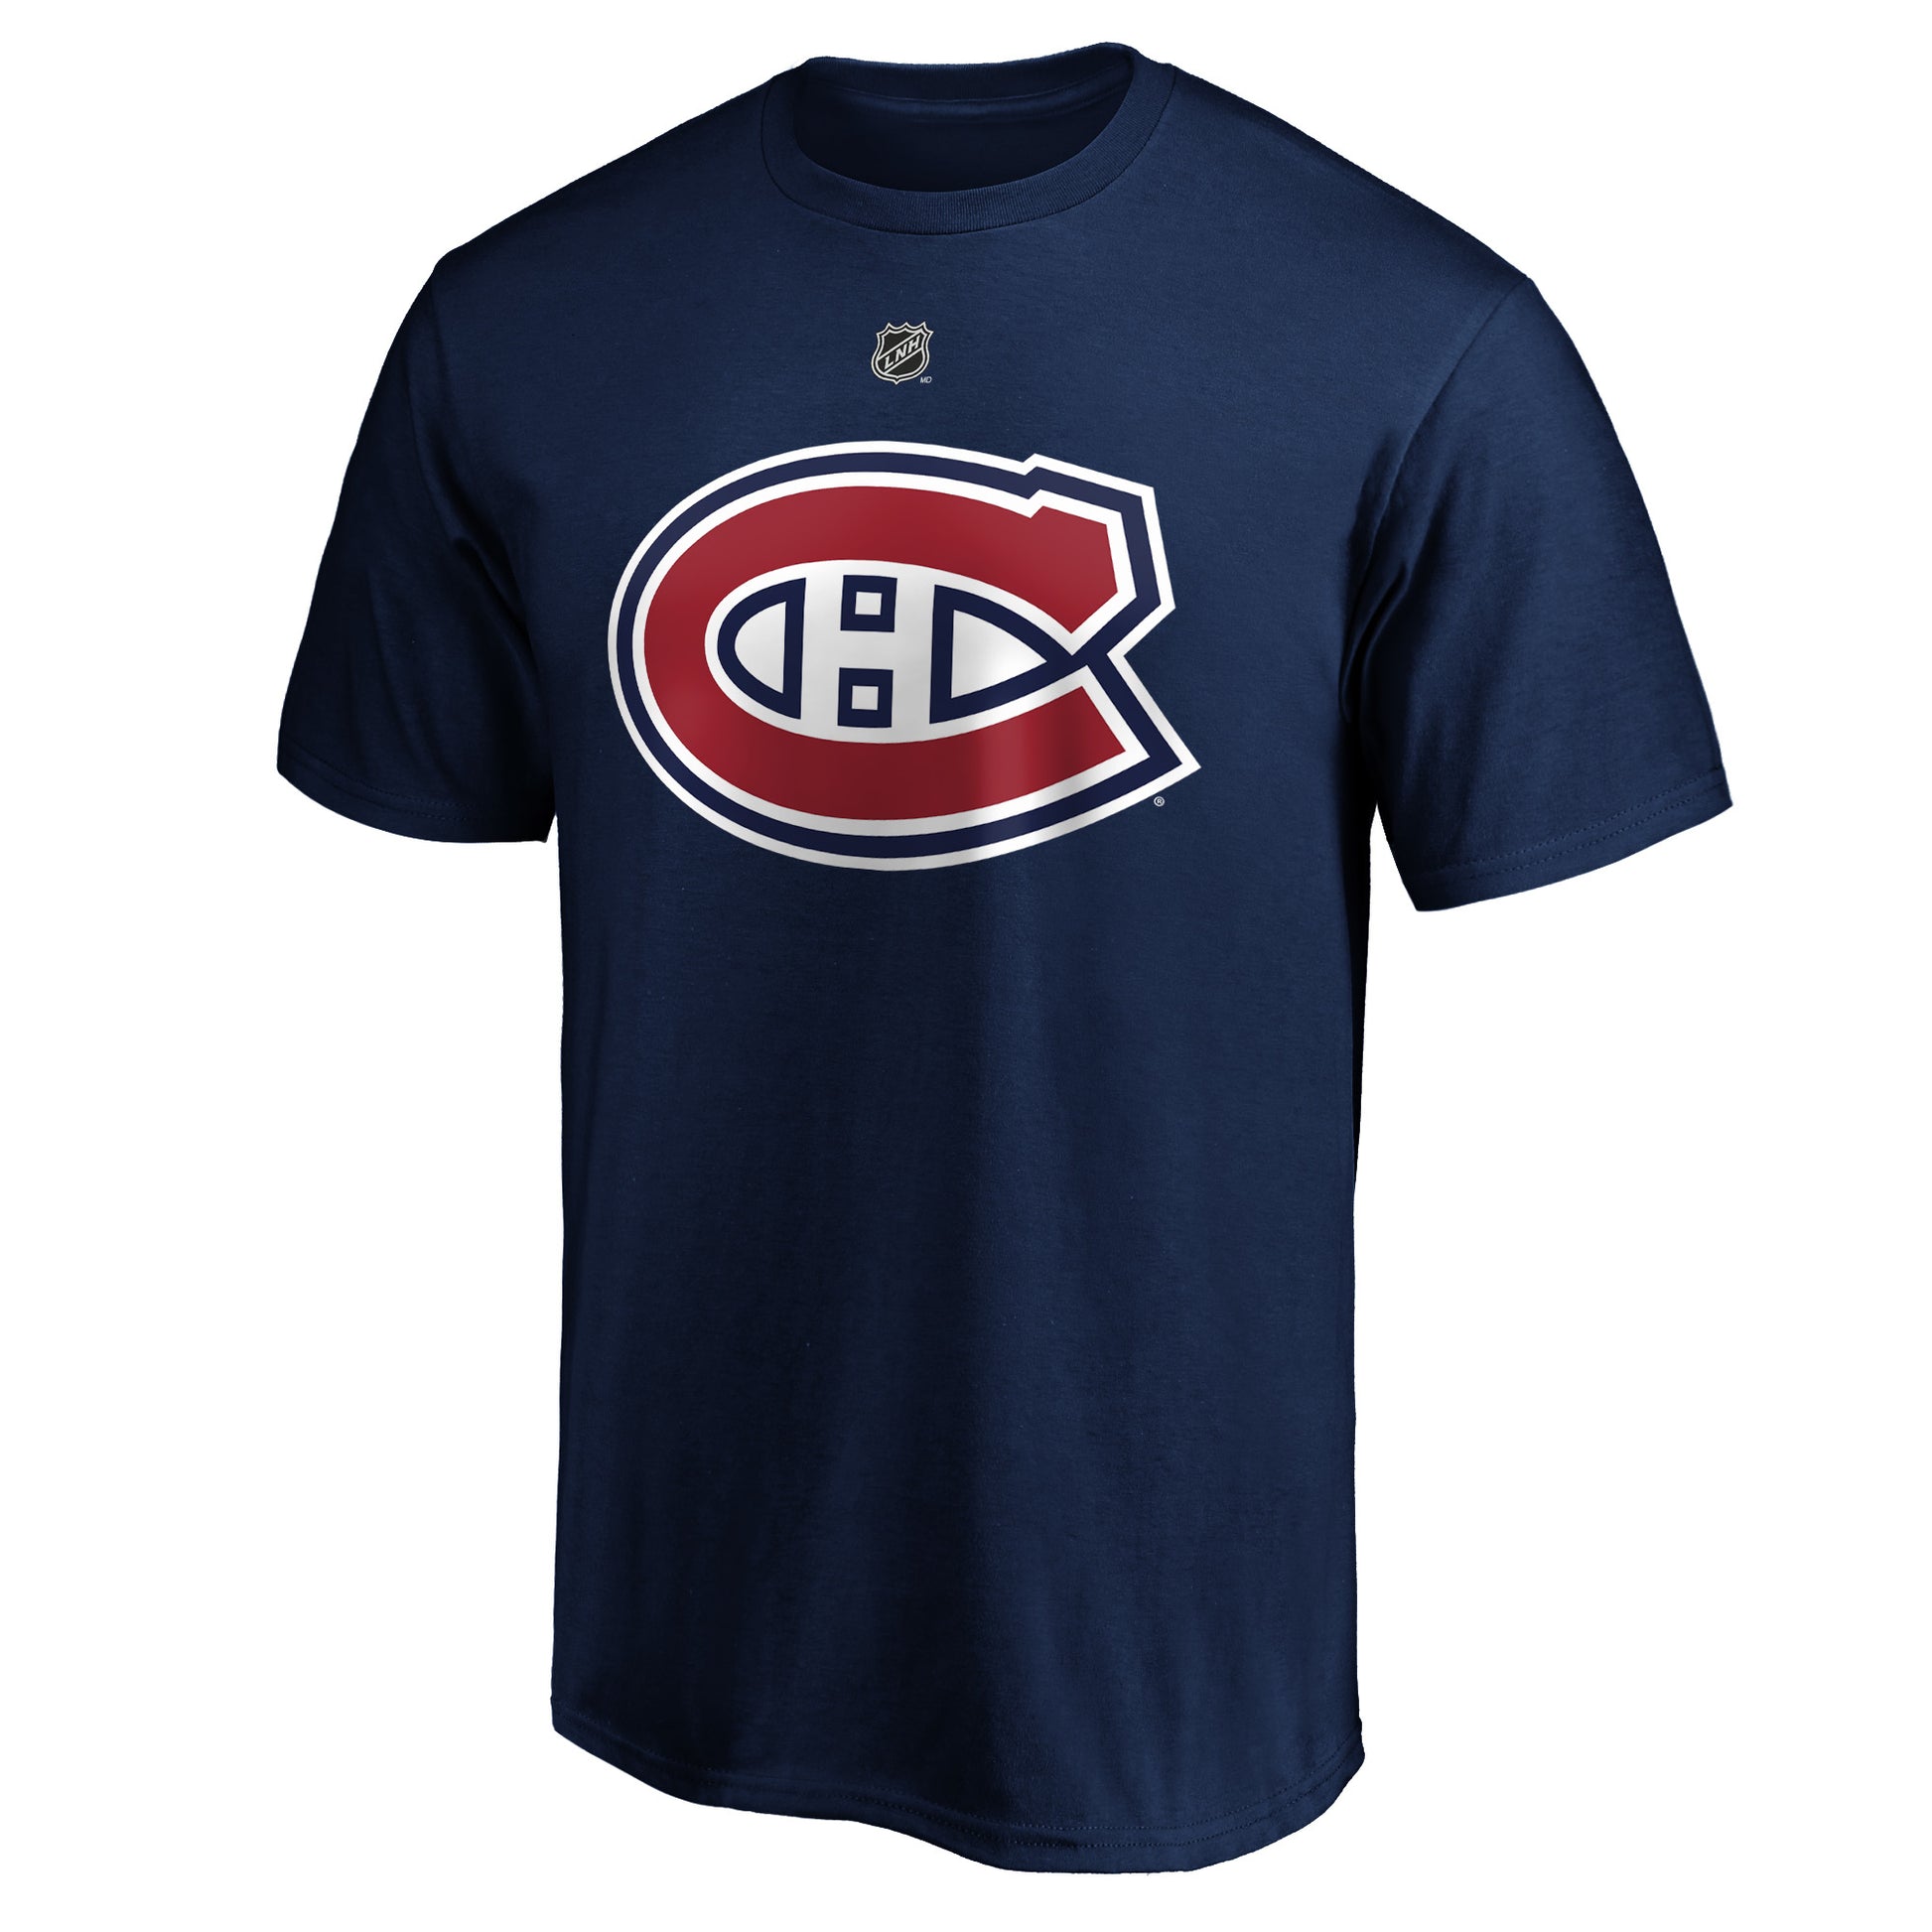 T-Shirt Canadiens de Montréal  - Nick Suzuki (#14)